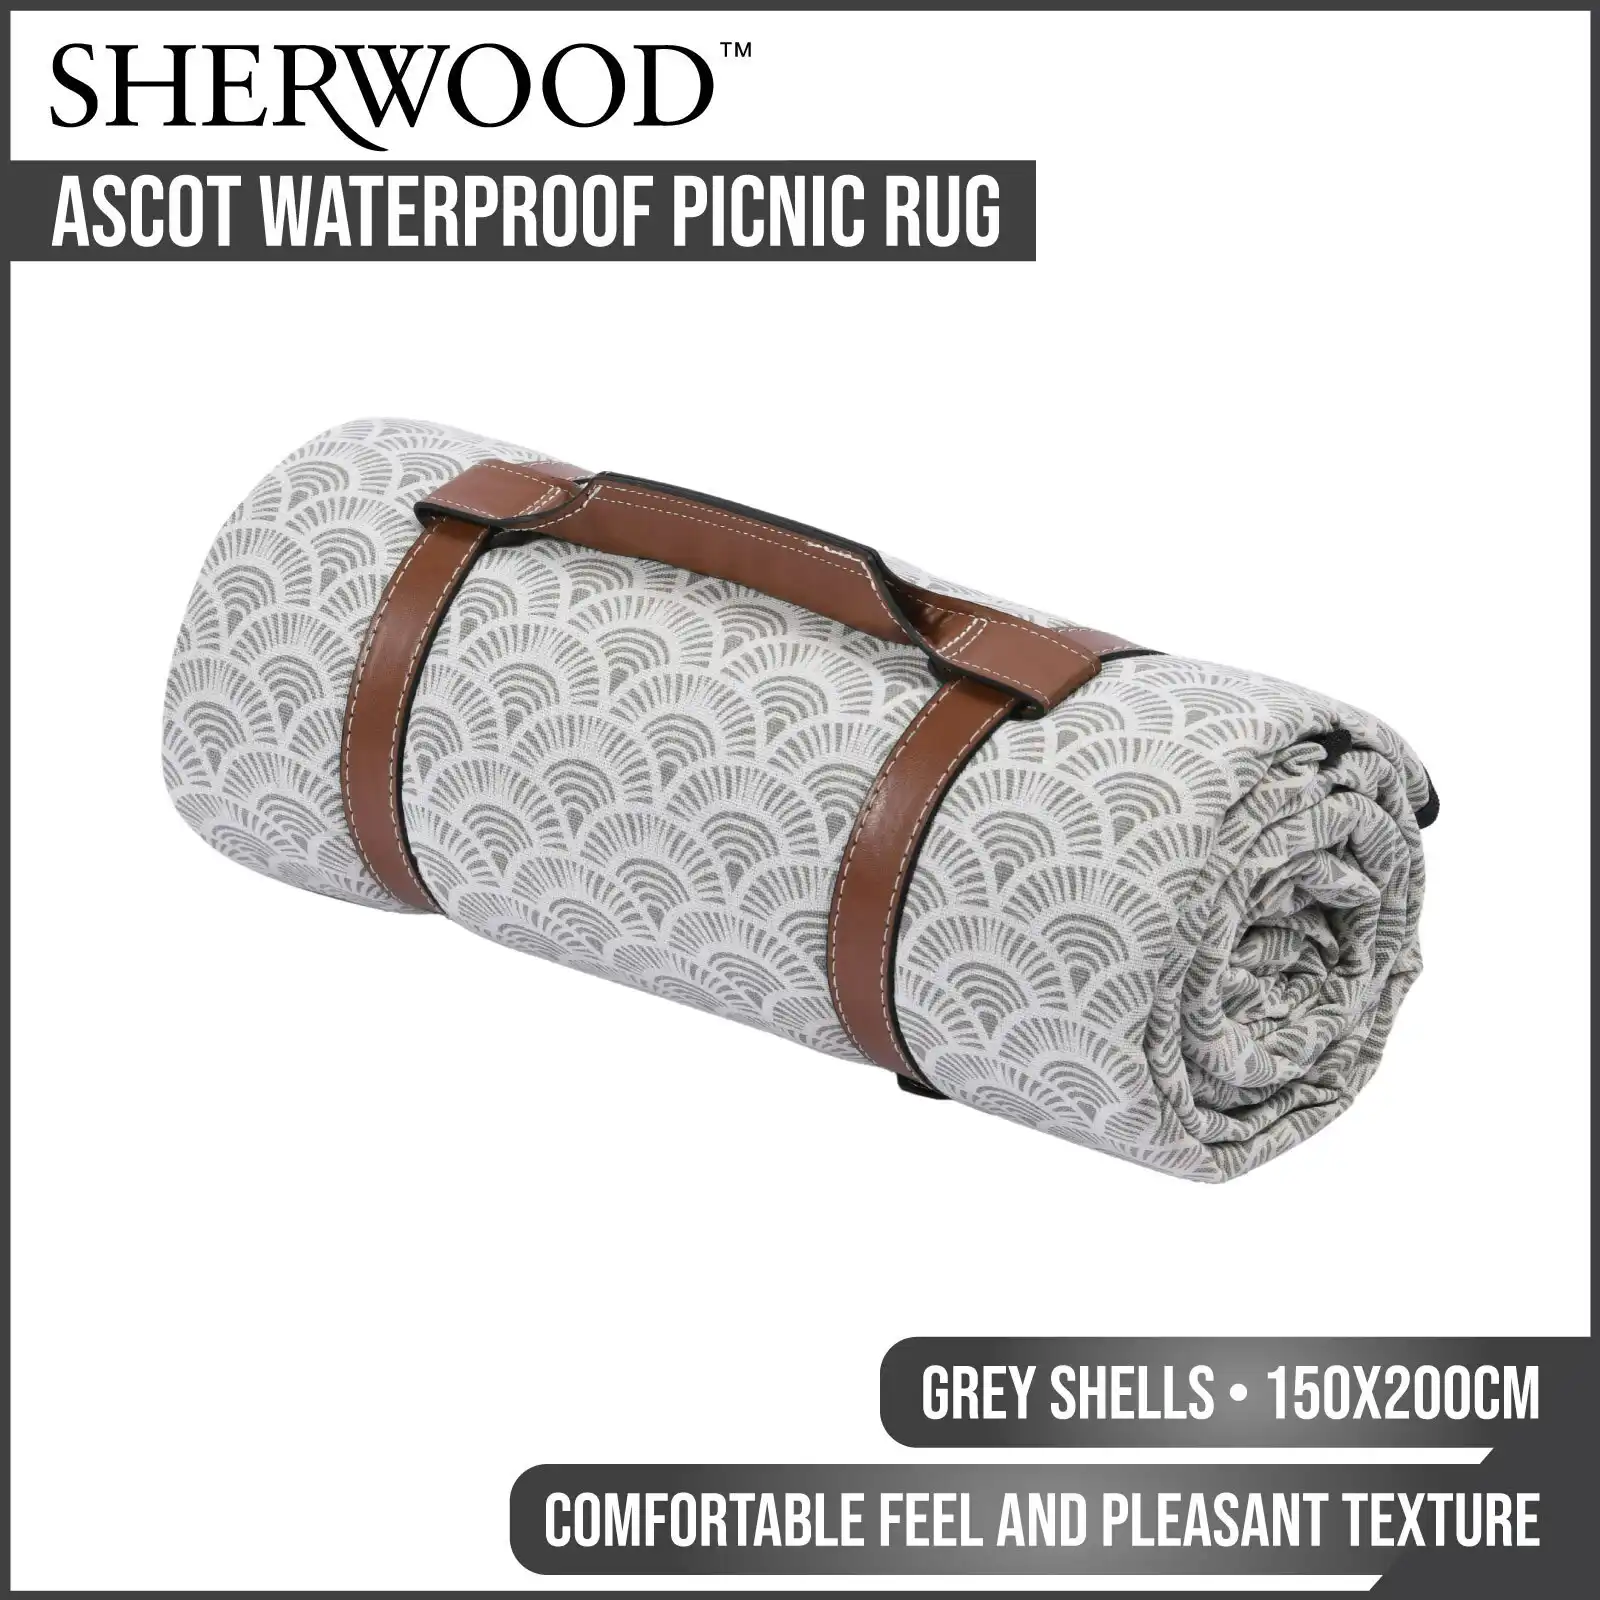 Sherwood Ascot Waterproof Picnic Rug Grey Shells 150x200cm